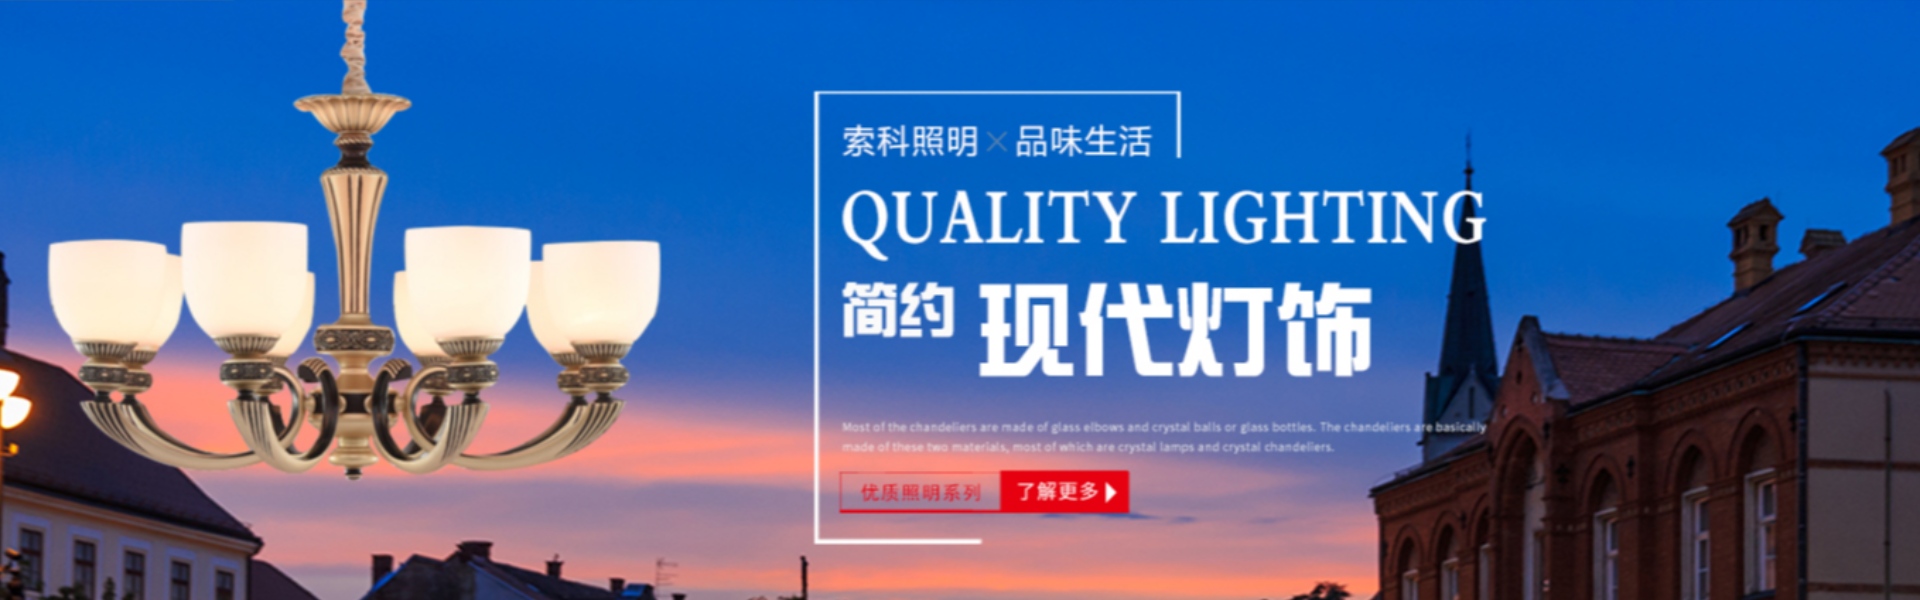 iluminat pentru locuințe, iluminat exterior, iluminat solar,Zhongshan Suoke Lighting Electric Co., Ltd.